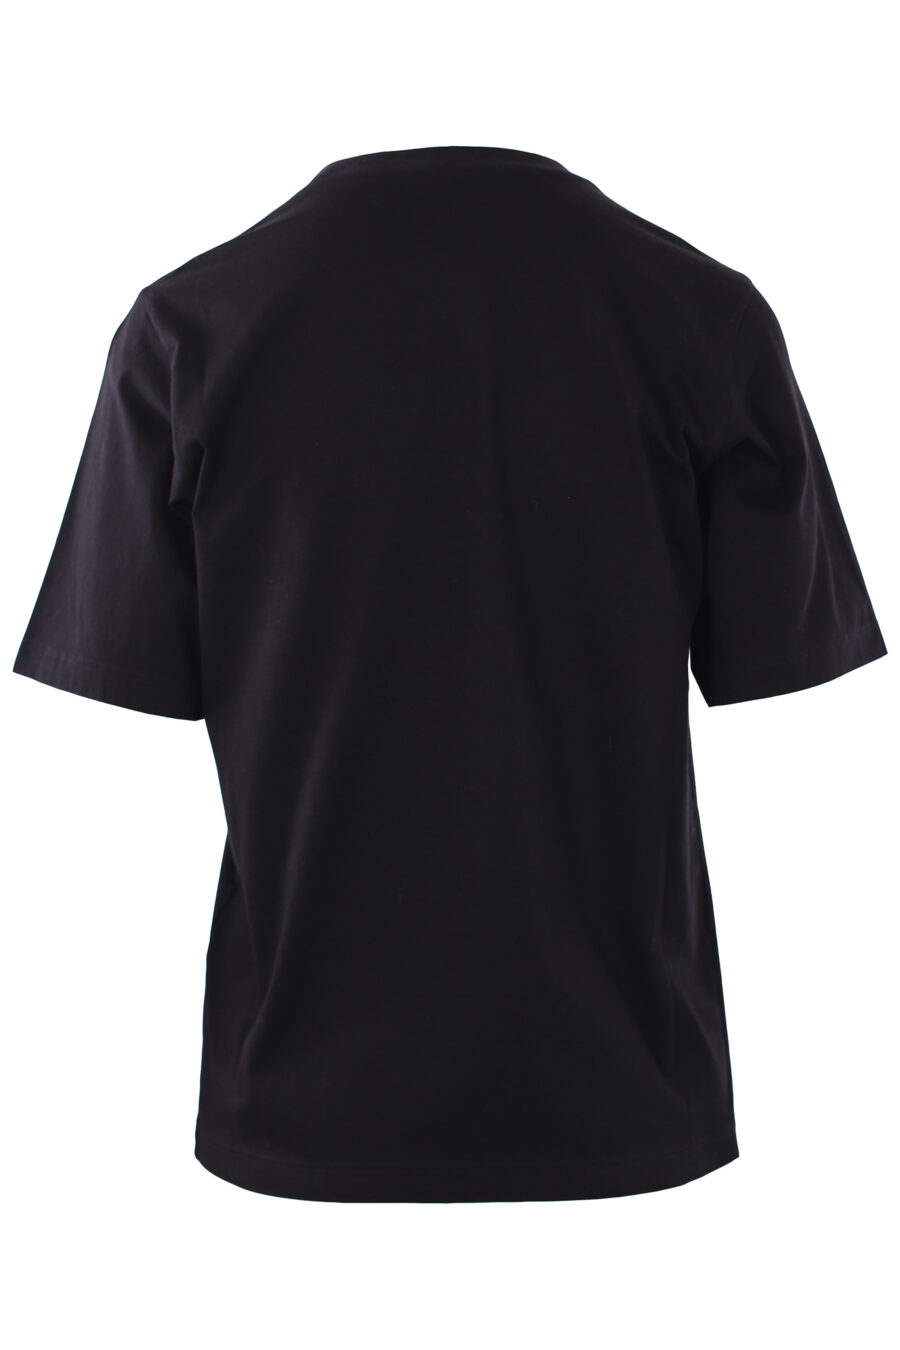 Camiseta negra con logo "icon splash" multicolor - IMG 0271